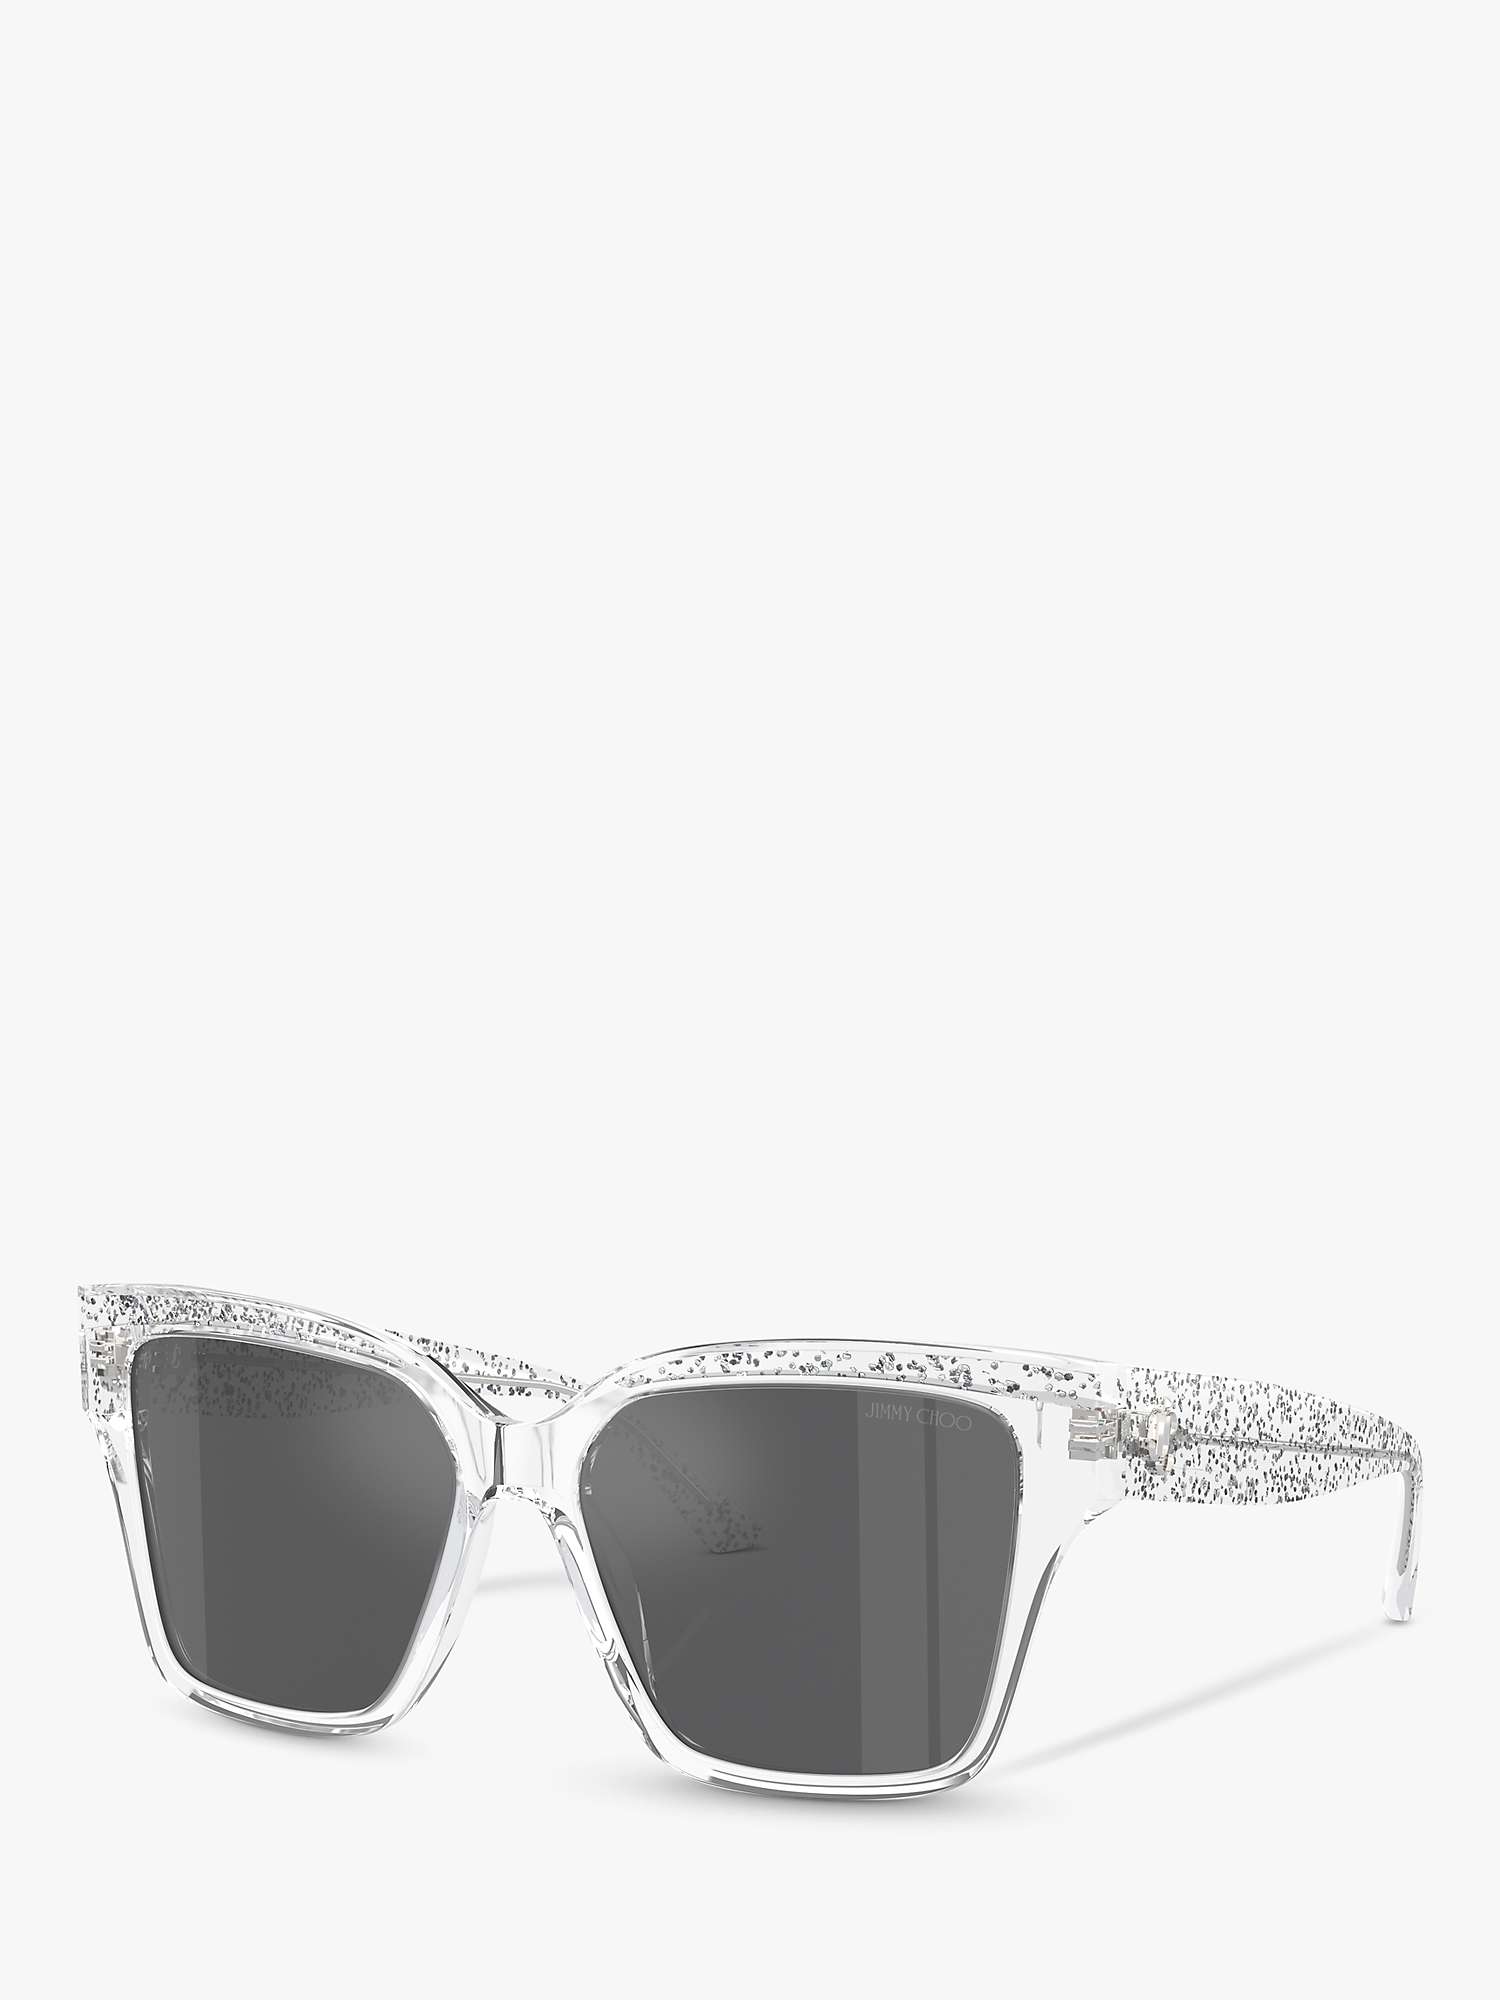 Buy Jimmy Choo JC5003 Women's Square Sunglasses, Crystal Glitter/Silver Online at johnlewis.com